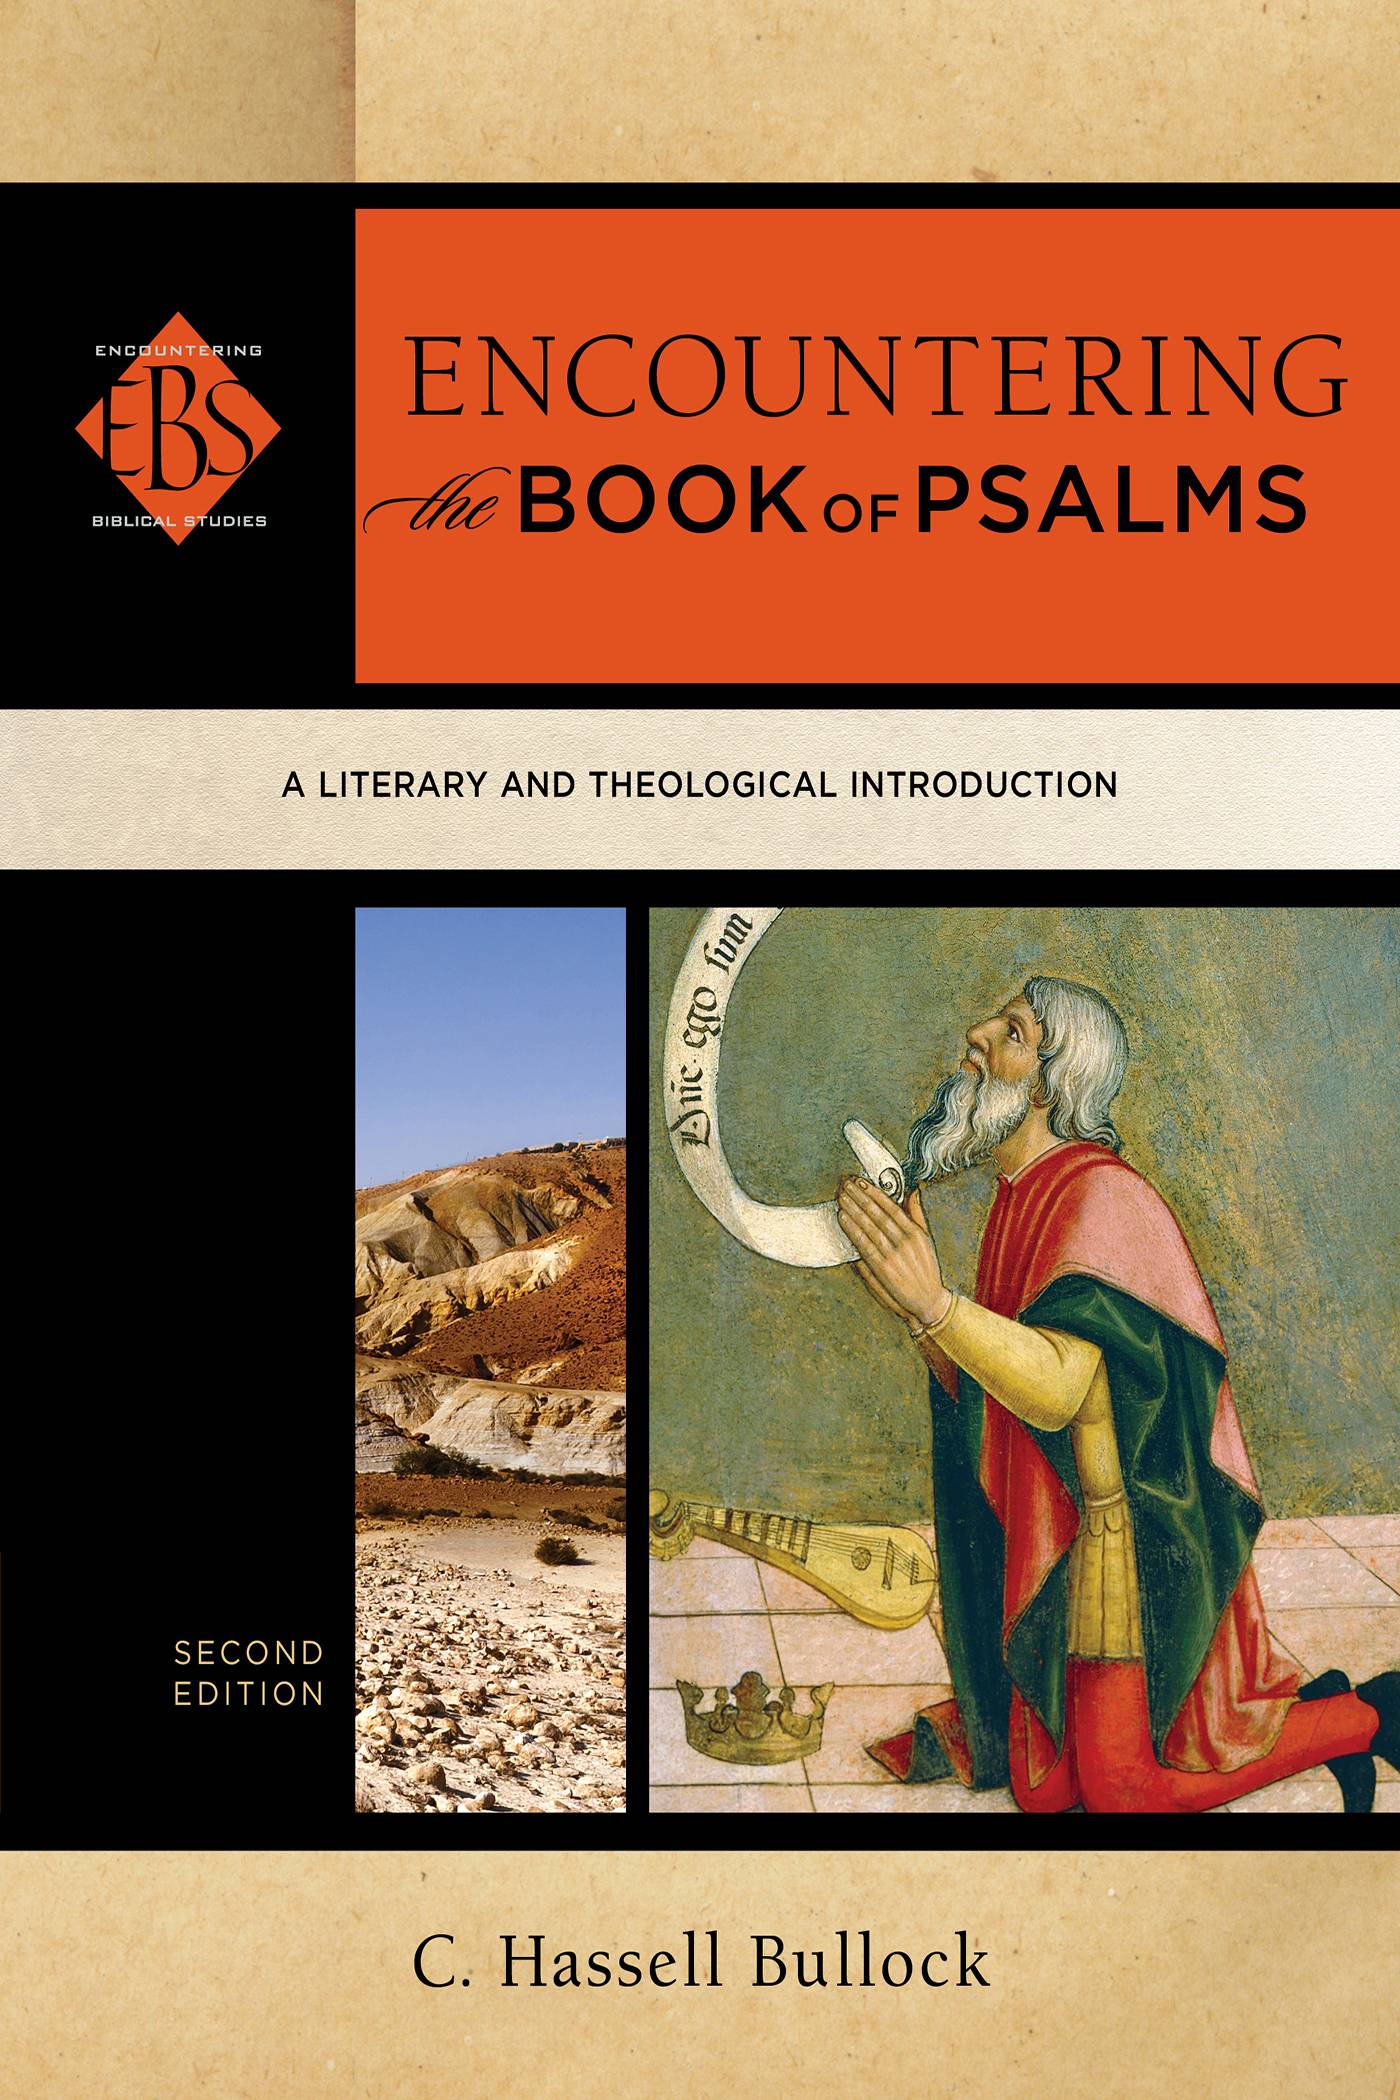 [Encountering Biblical Studies 01] • Encountering the Book of Psalms